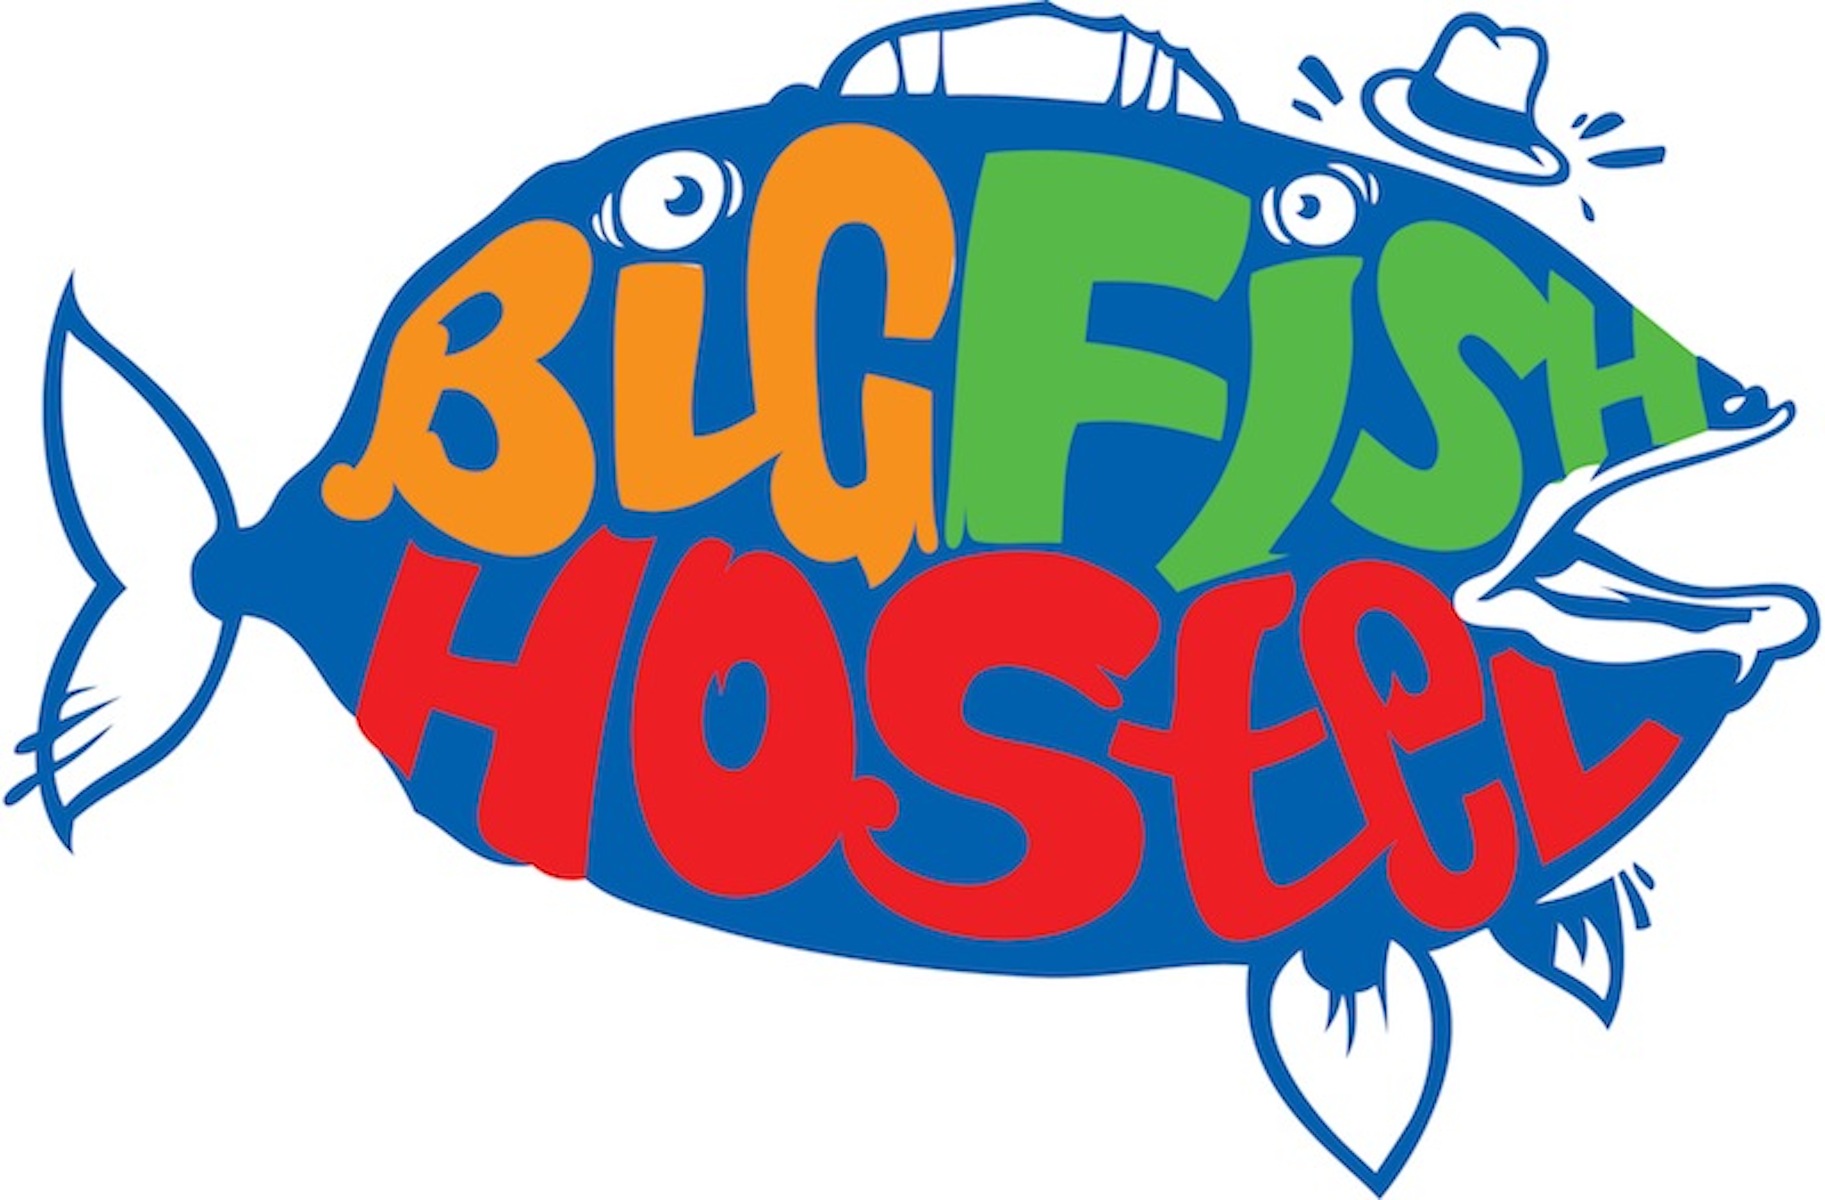 Hostelezz Budapesten – Big Fish